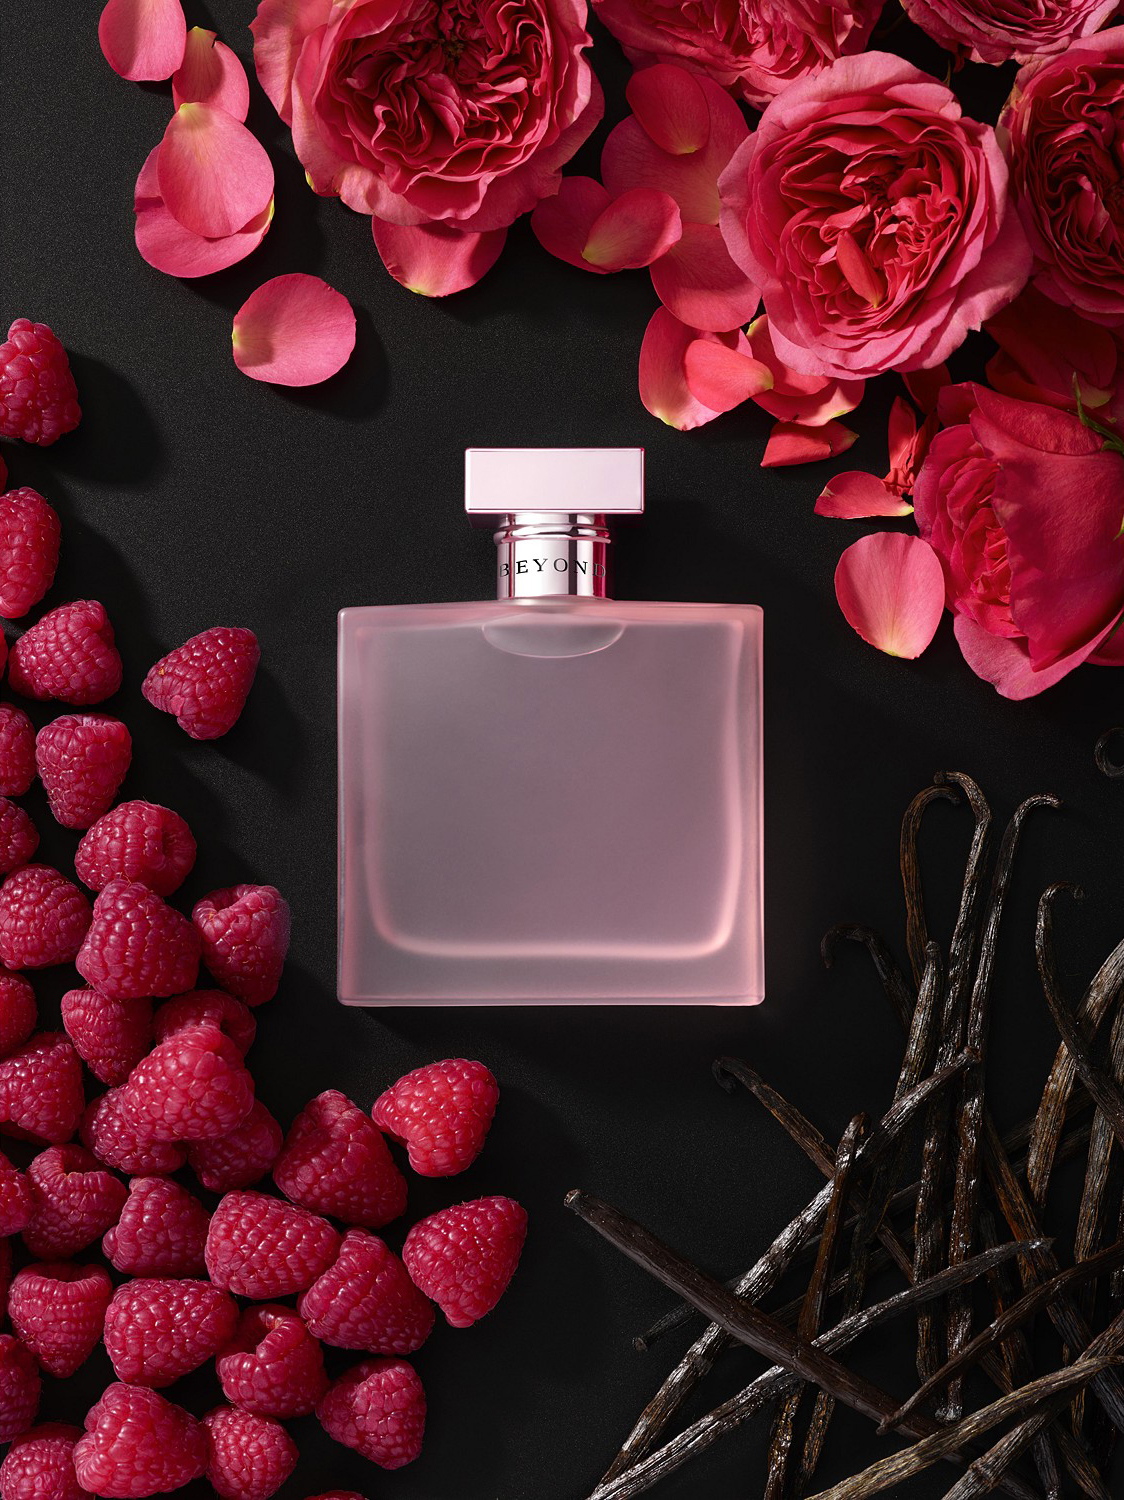 Ralph Lauren Beyond Romance ~ New Fragrances